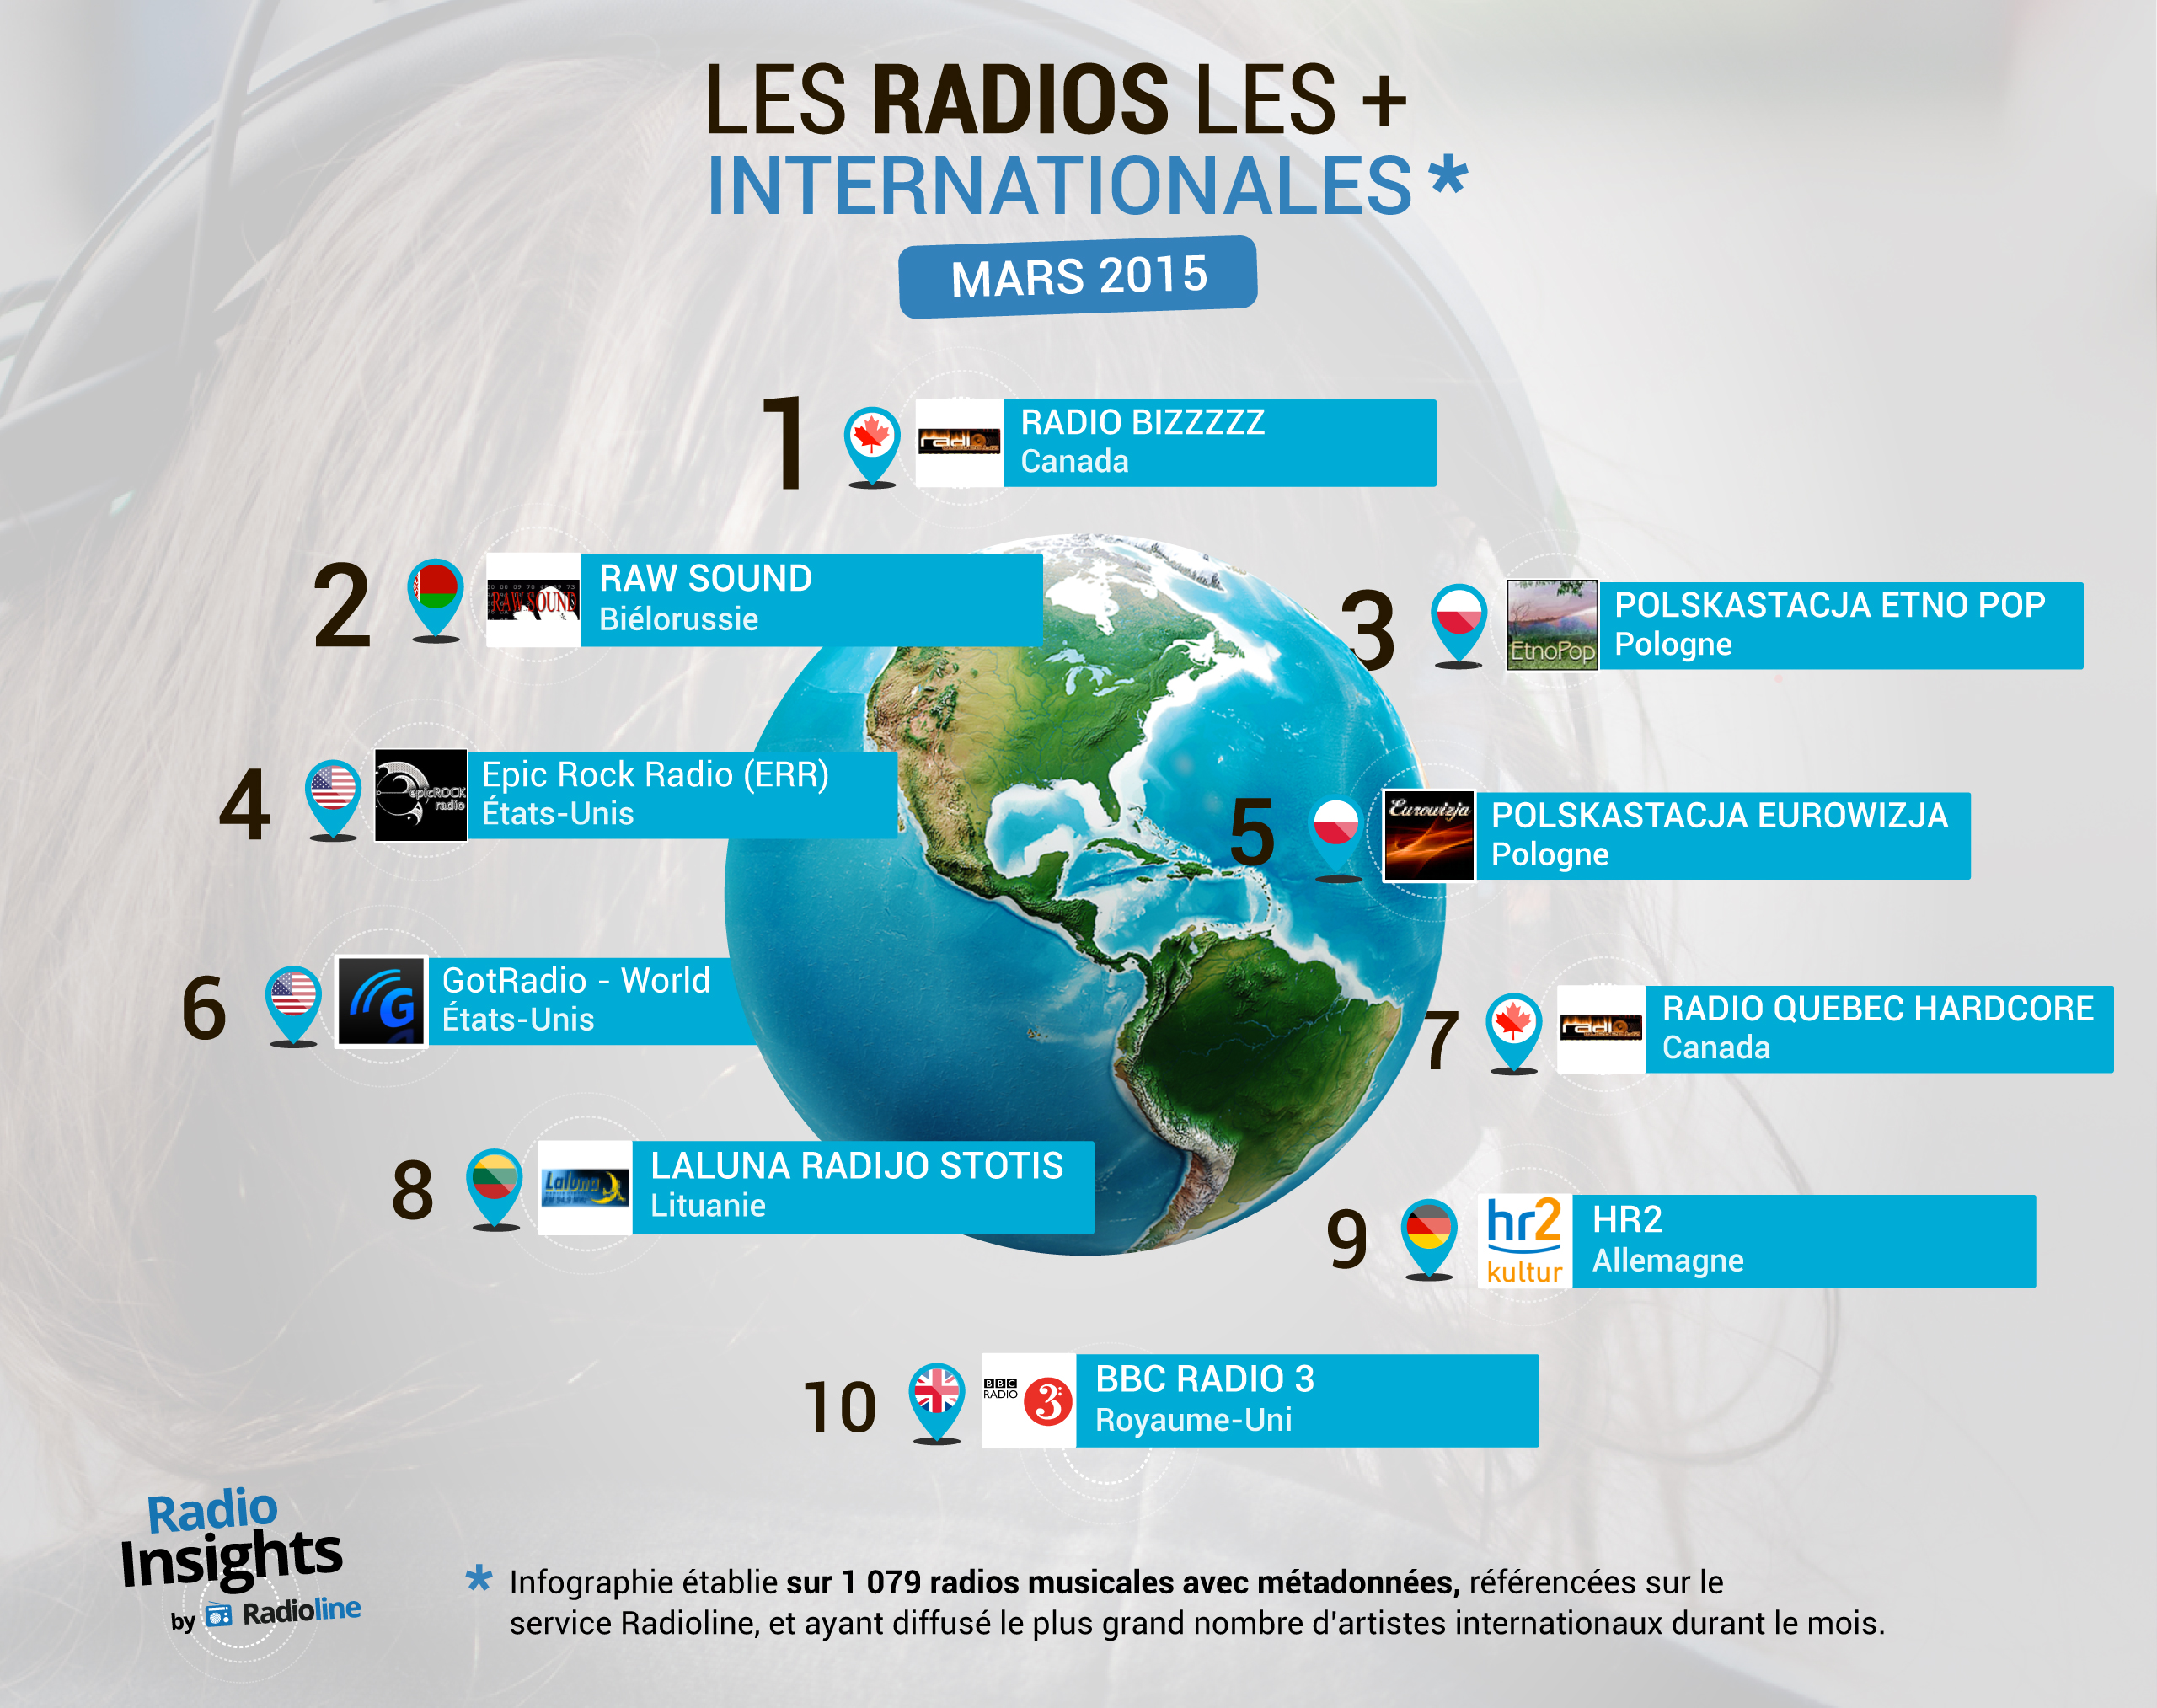 Et la radio la plus internationale est...